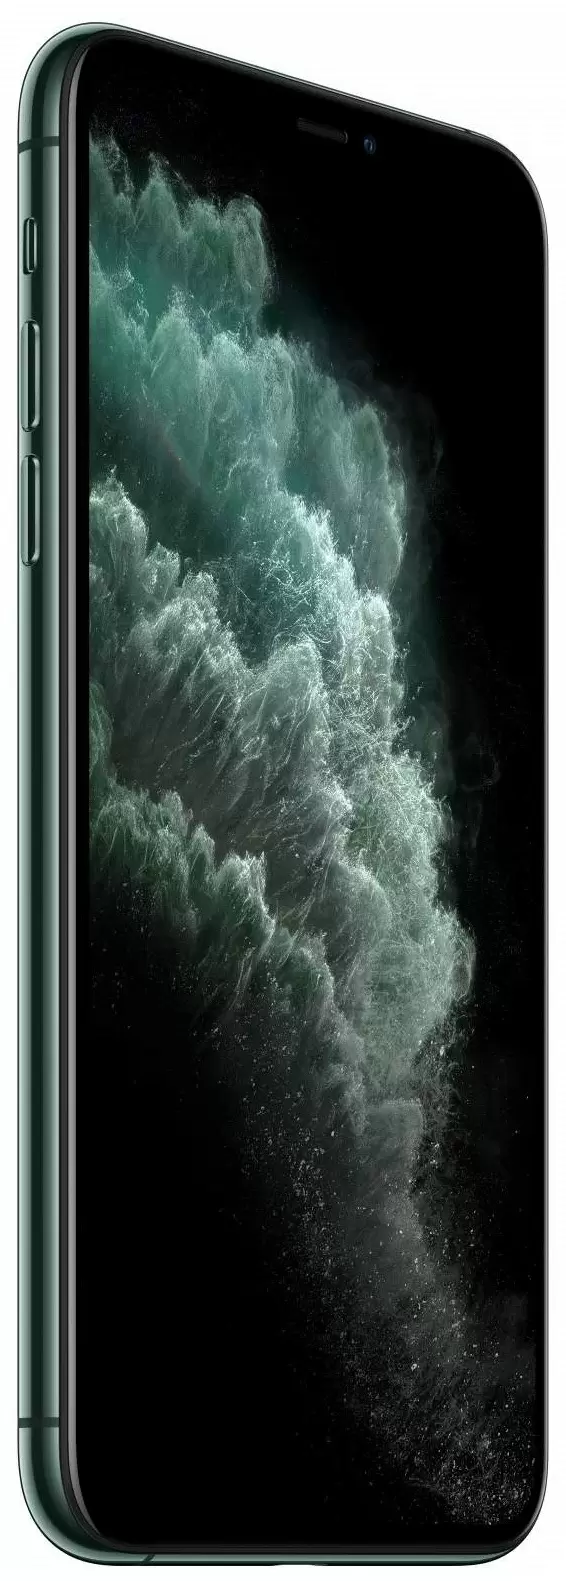 Smartphone Apple iPhone 11 Pro 256GB, verde închis